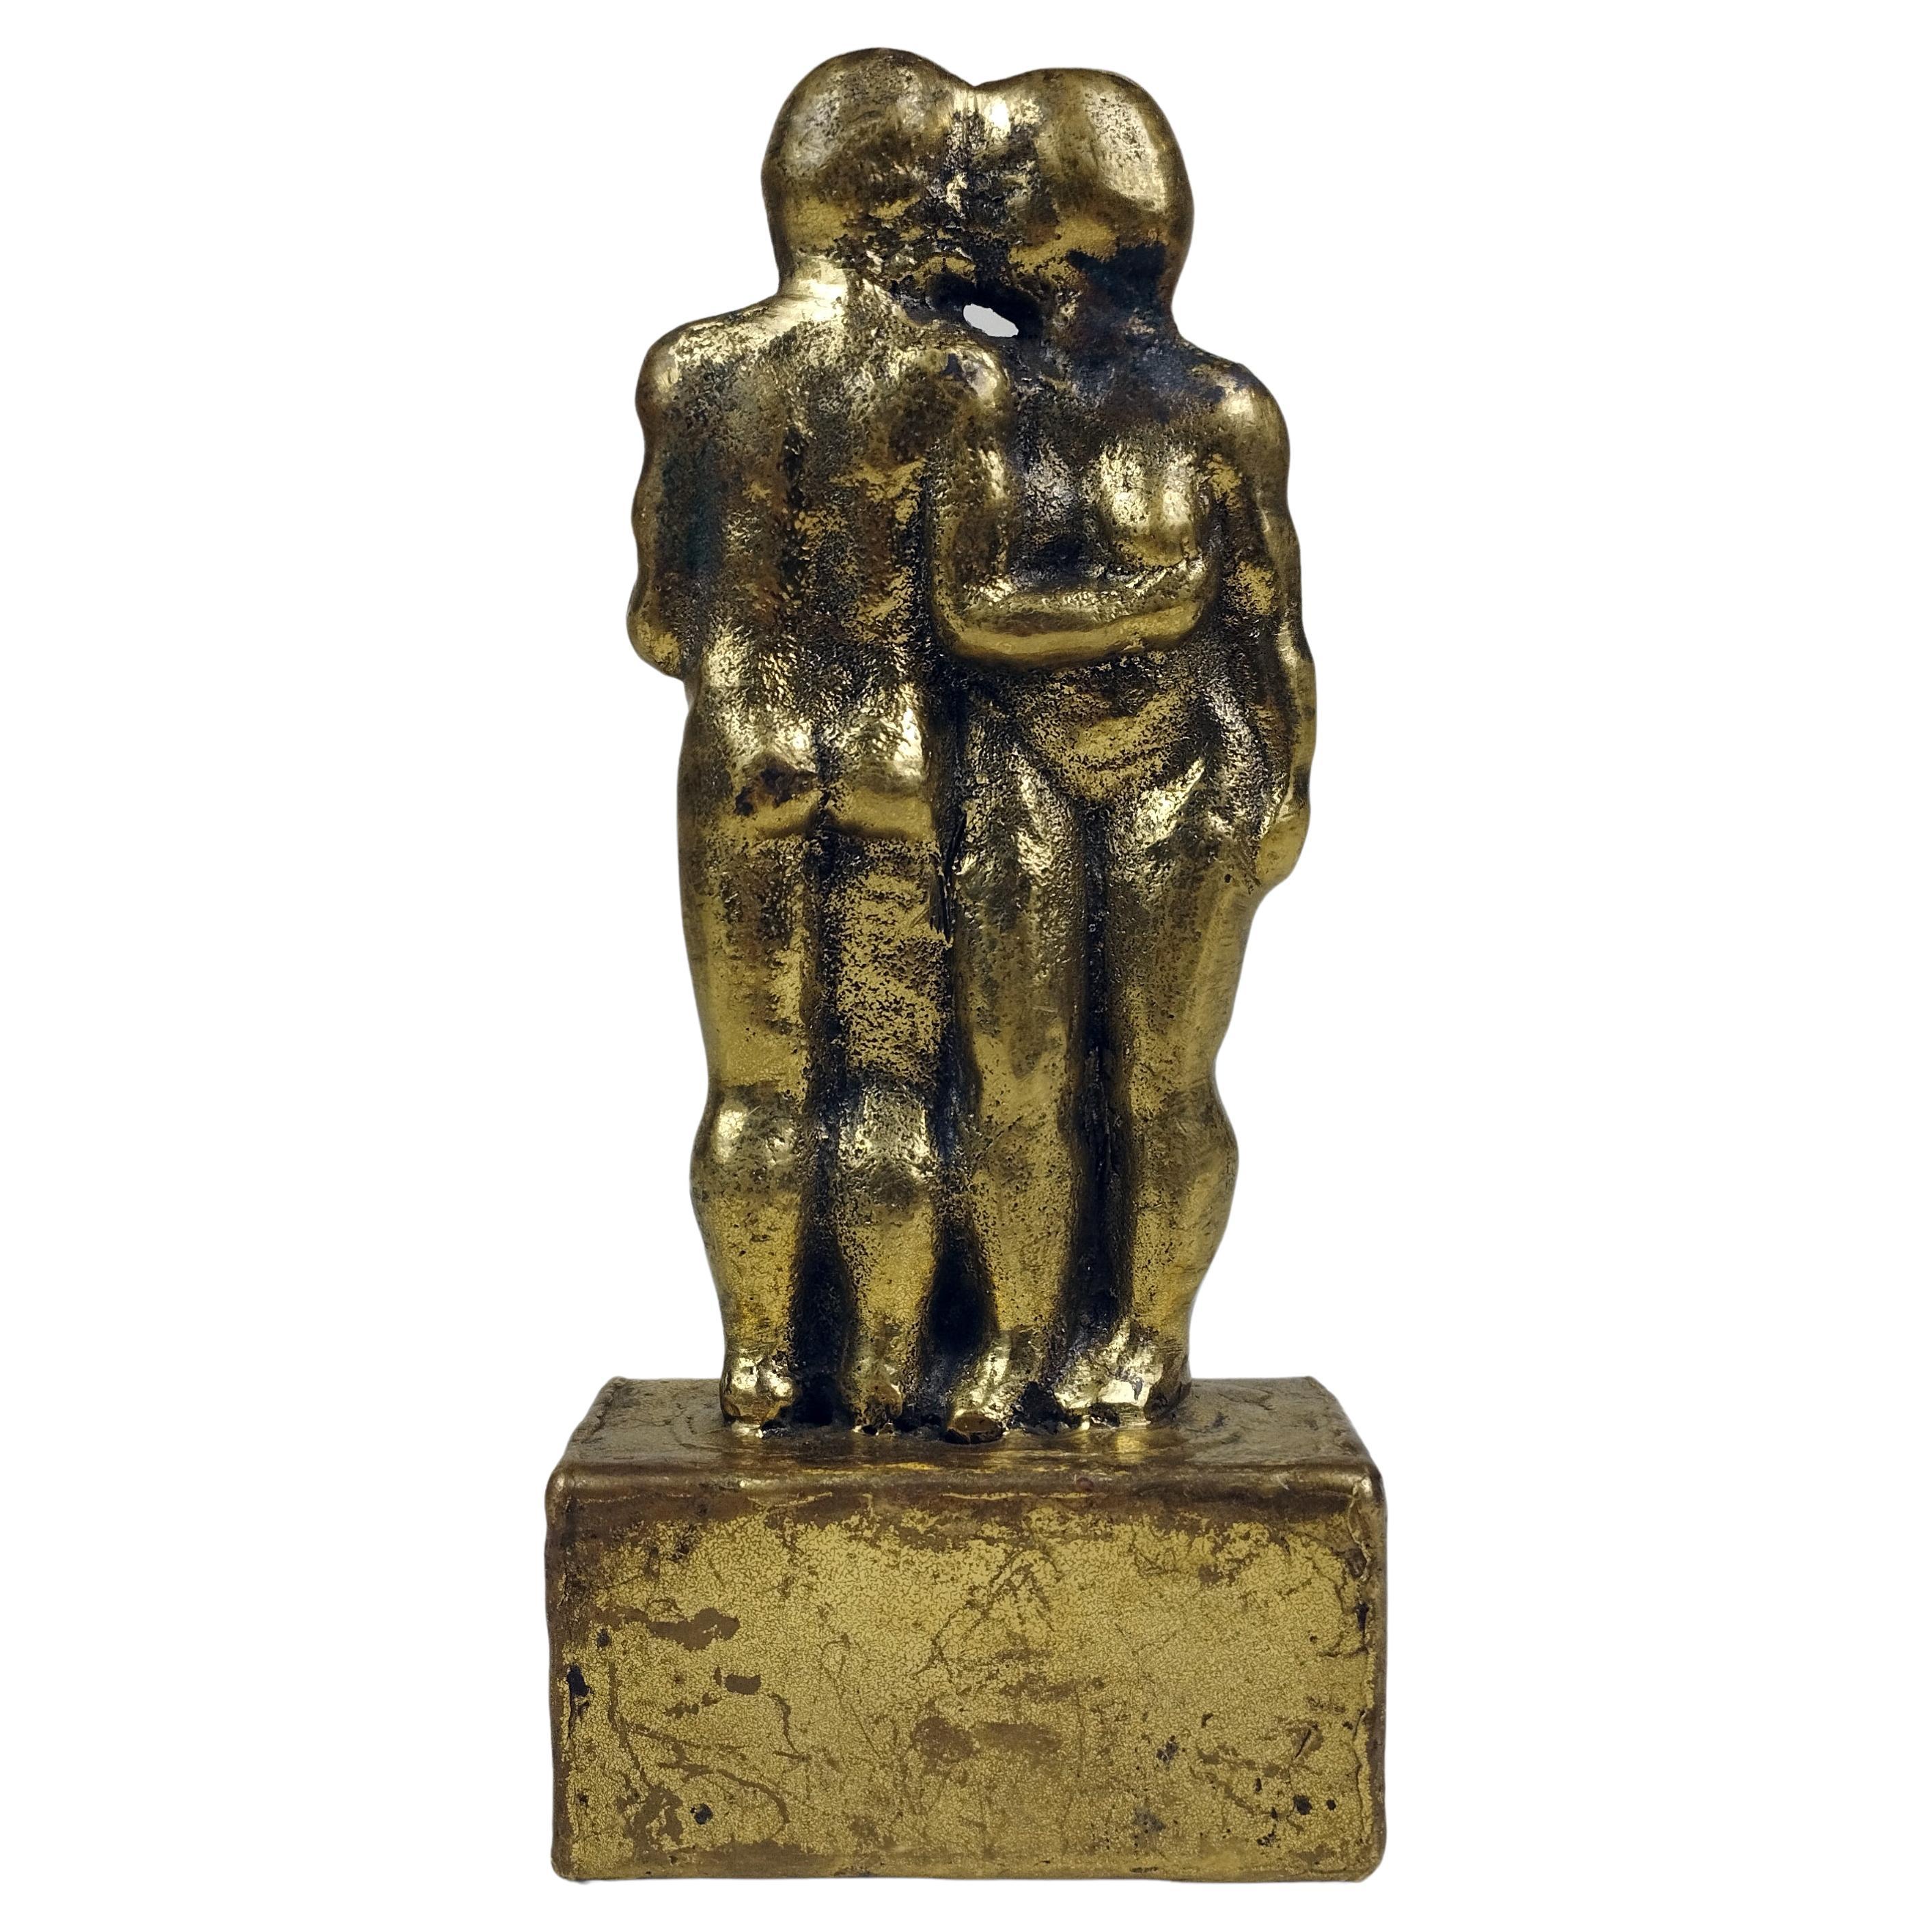 Pal Kepenyes Zwei Kissing-Skulptur aus Bronzeguss